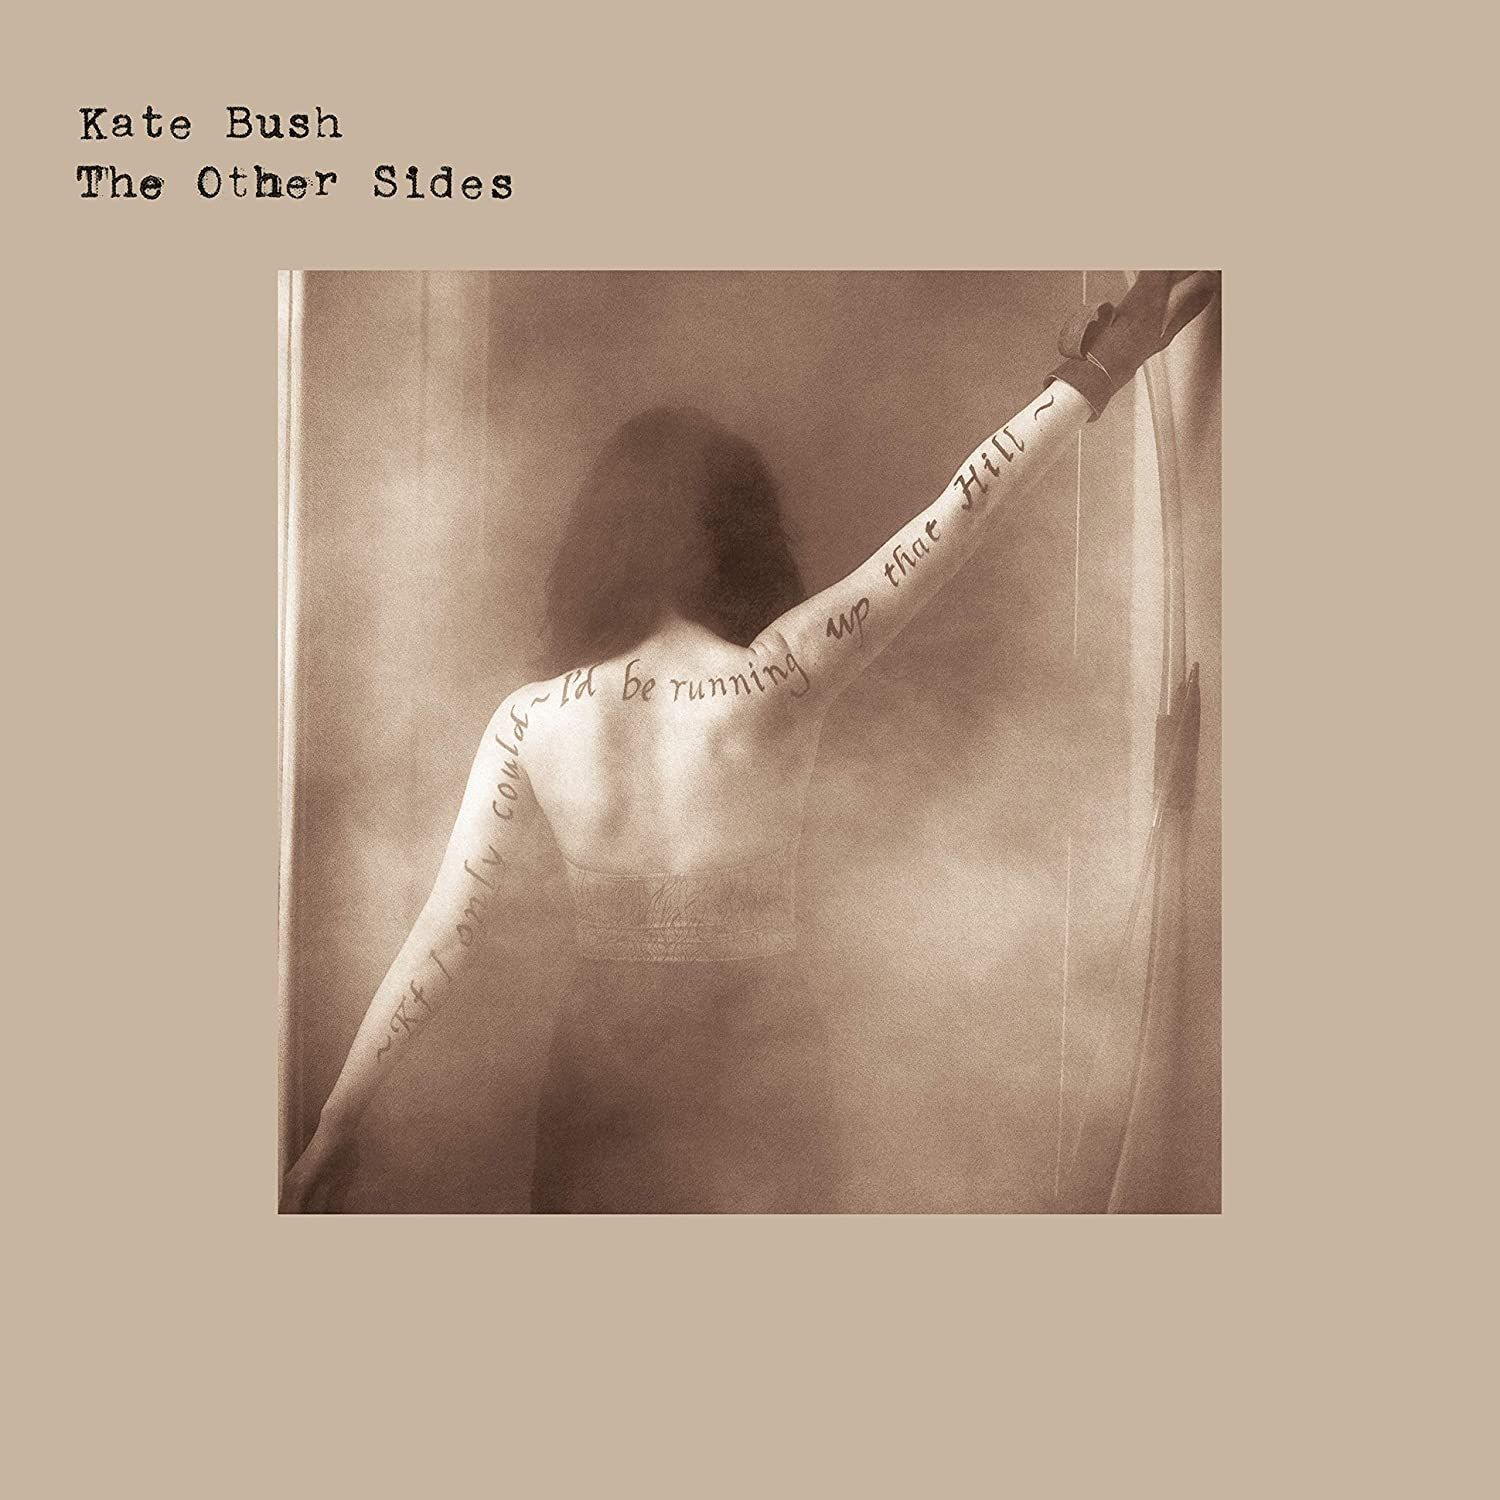 Imagem do álbum The Other Sides do(a) artista Kate Bush